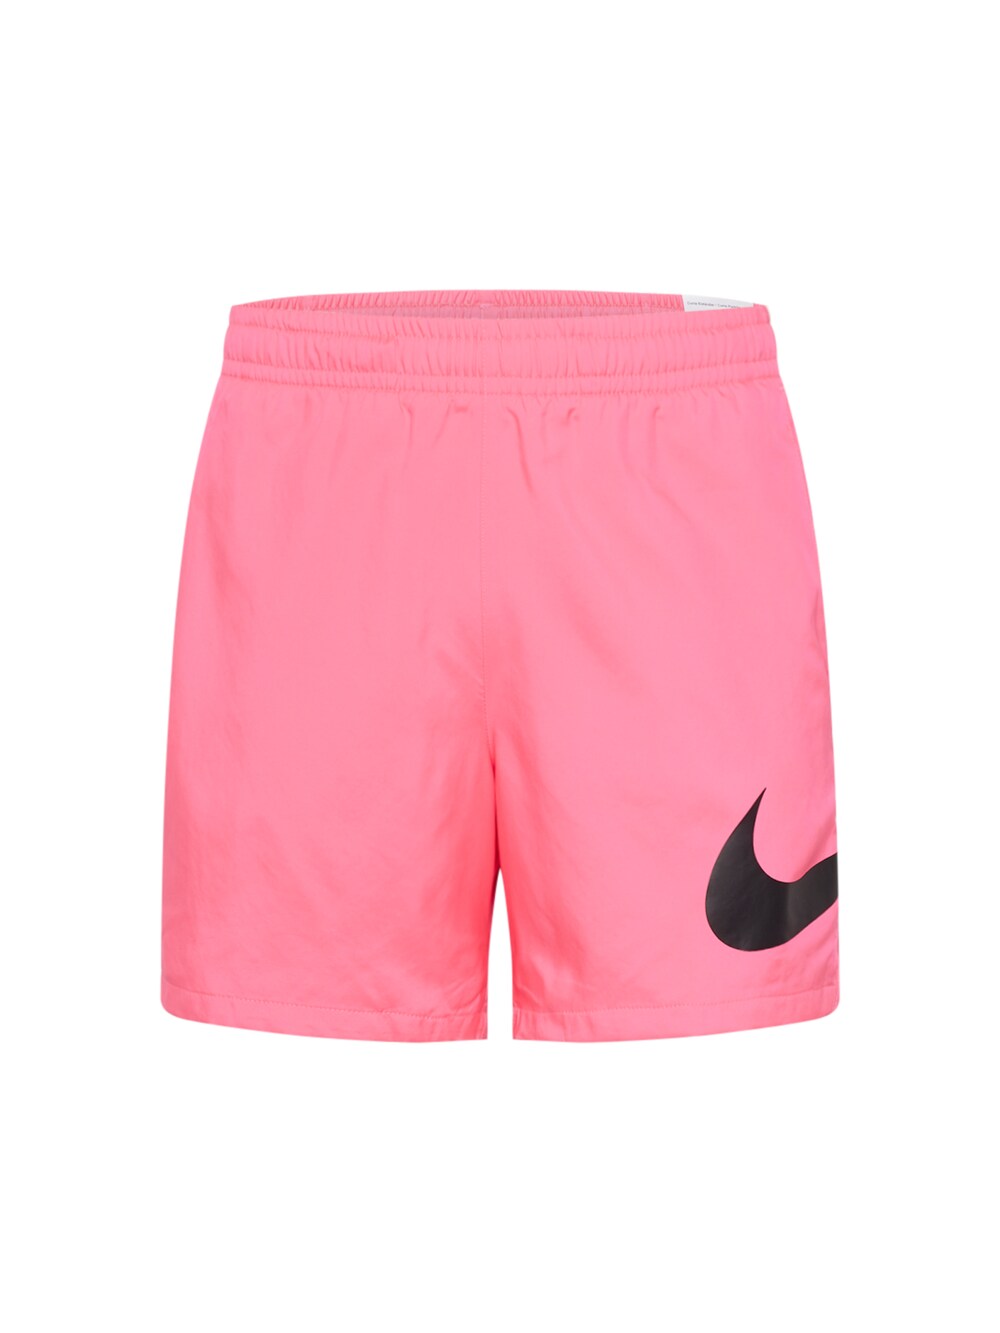 Обычные брюки Nike Sportswear, розовый